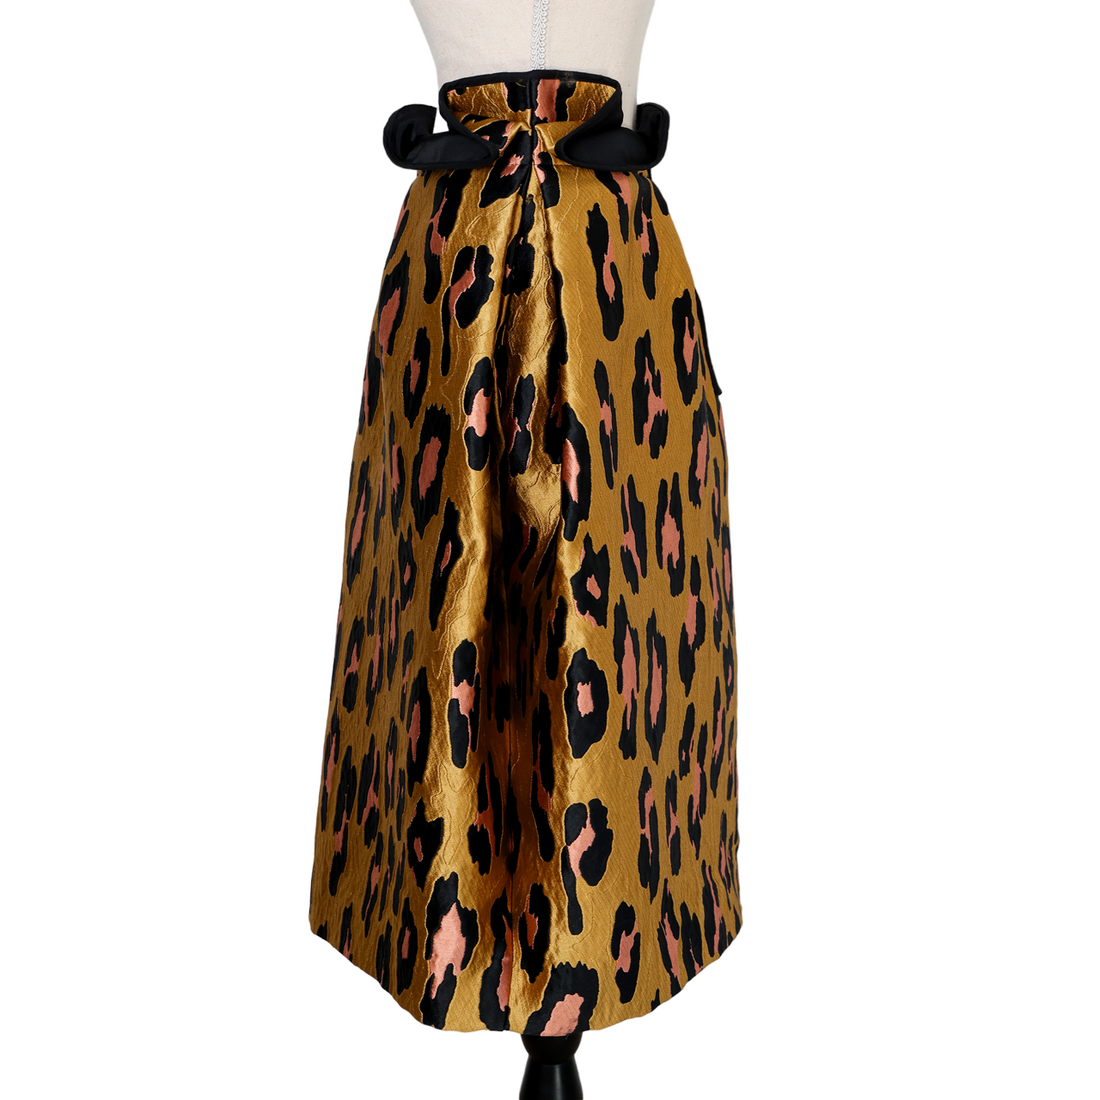 Odeeh Flared skirt in a leopard look